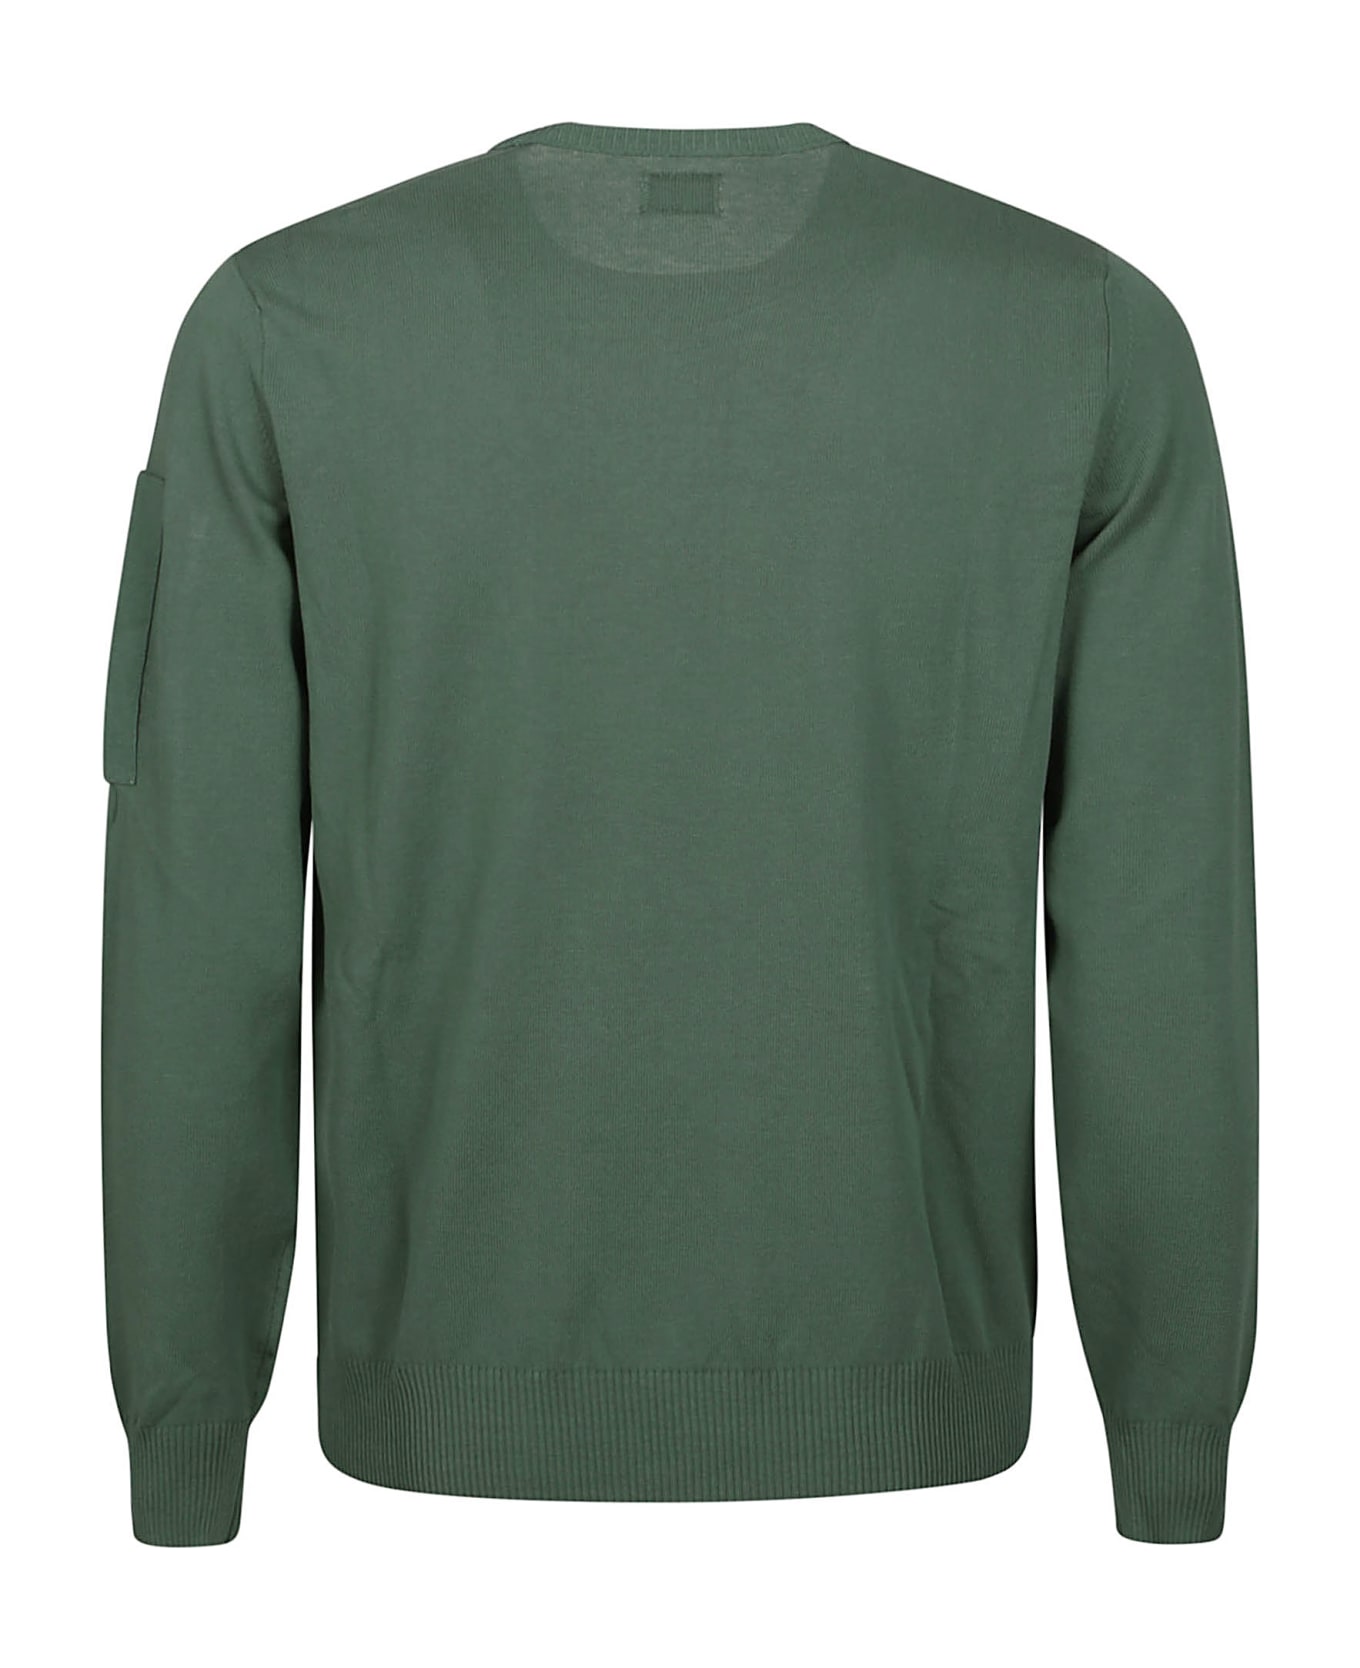 C.P. Company Sweater - Duck Green ニットウェア